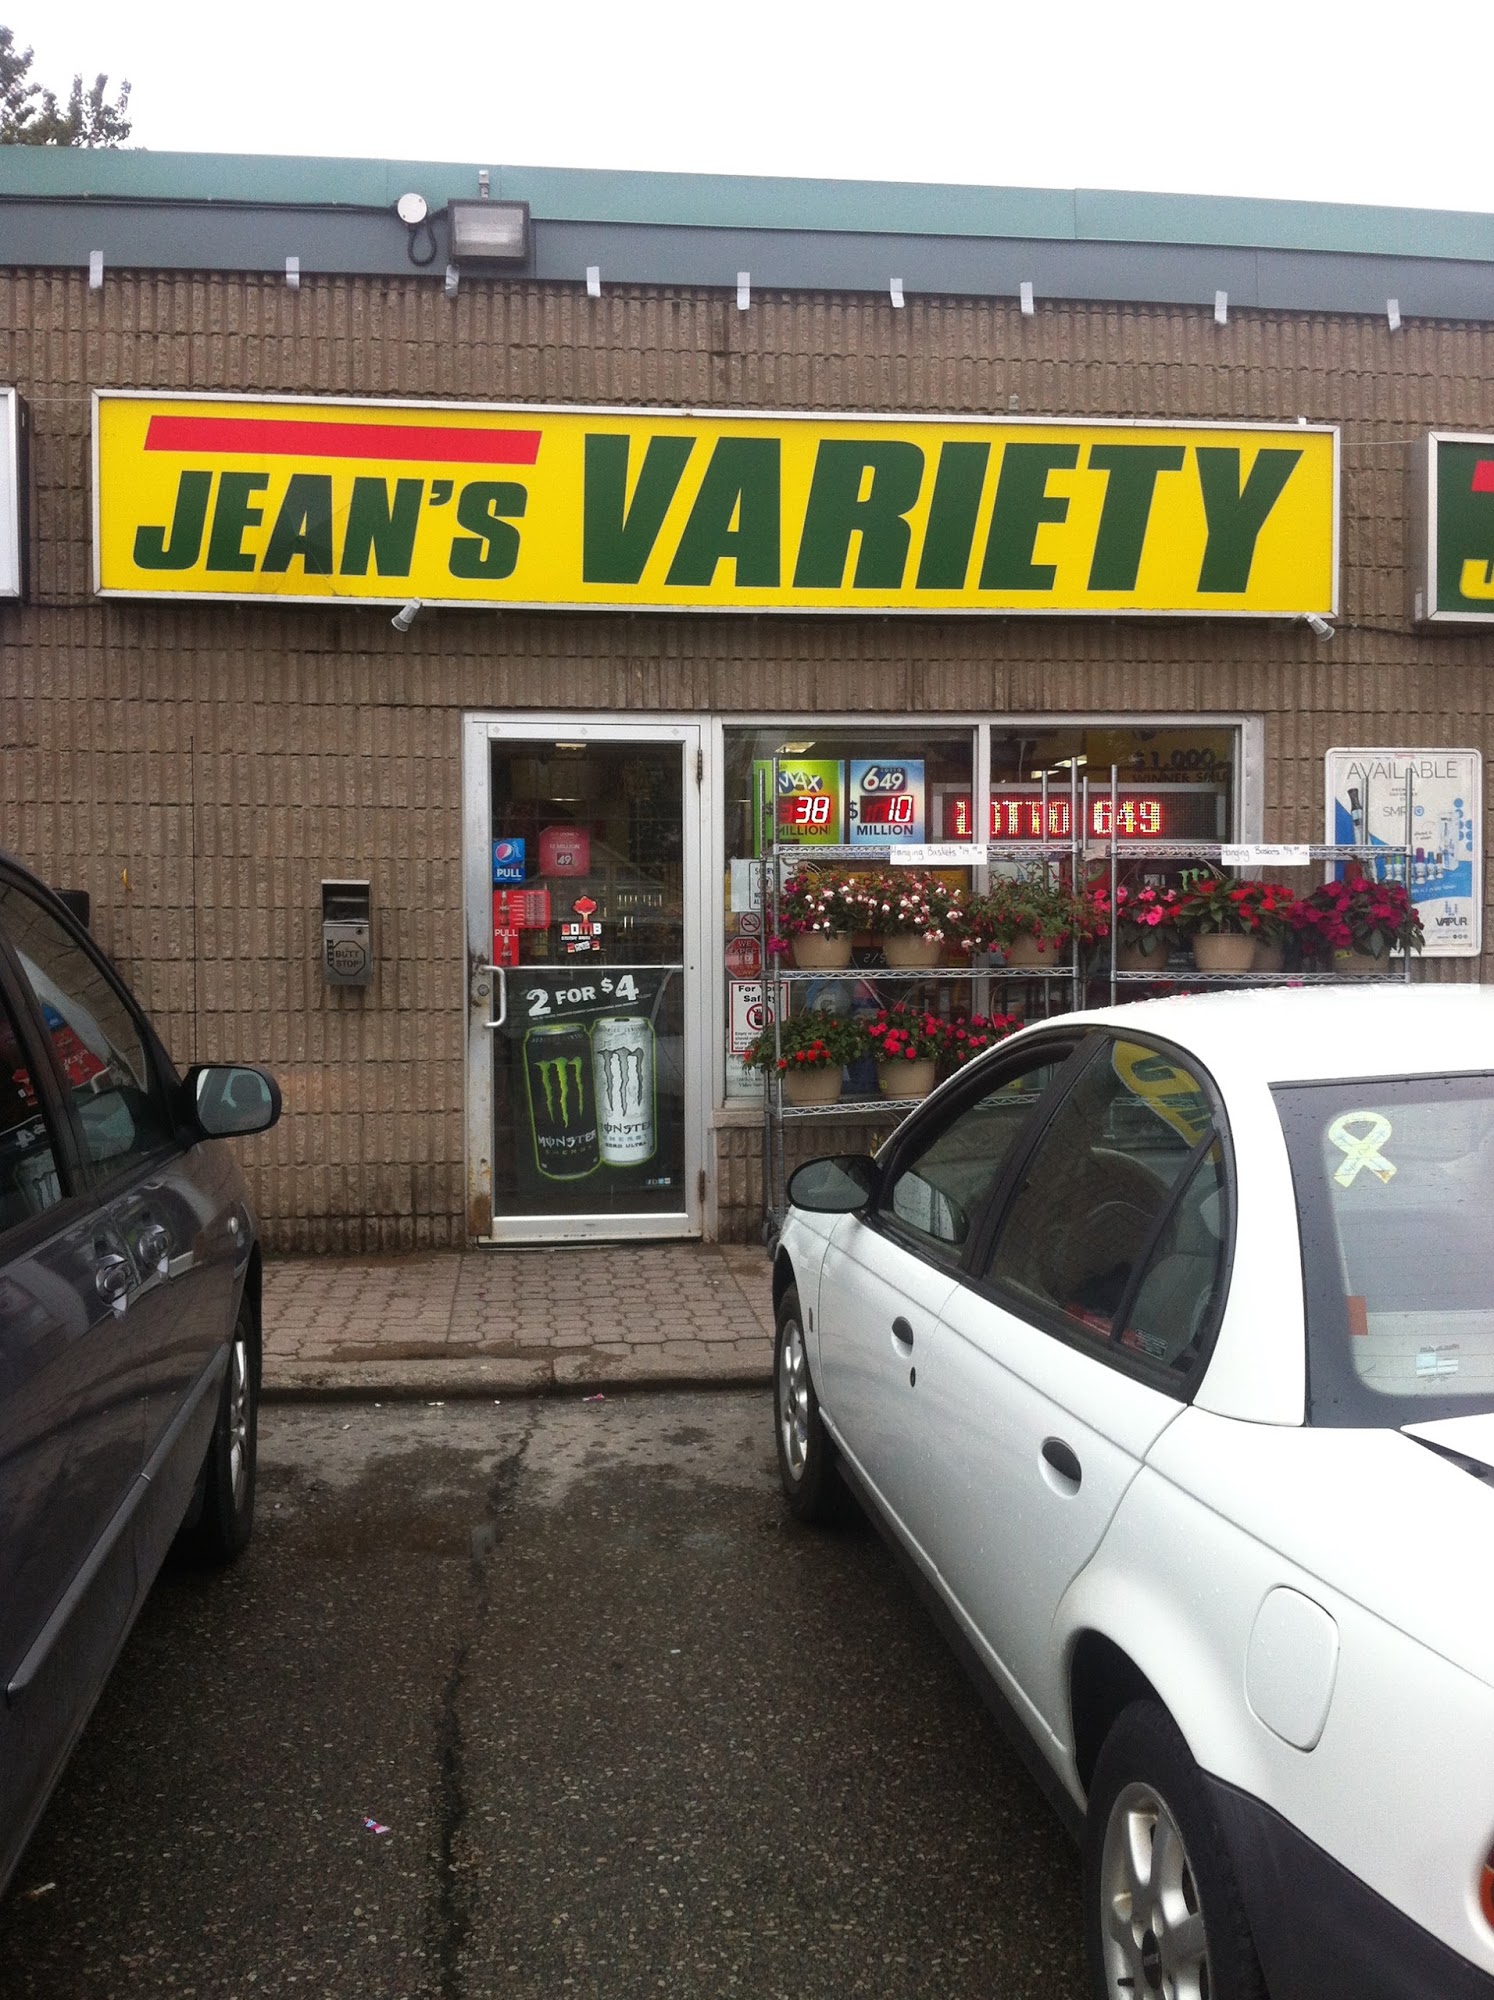 Jean's Variety